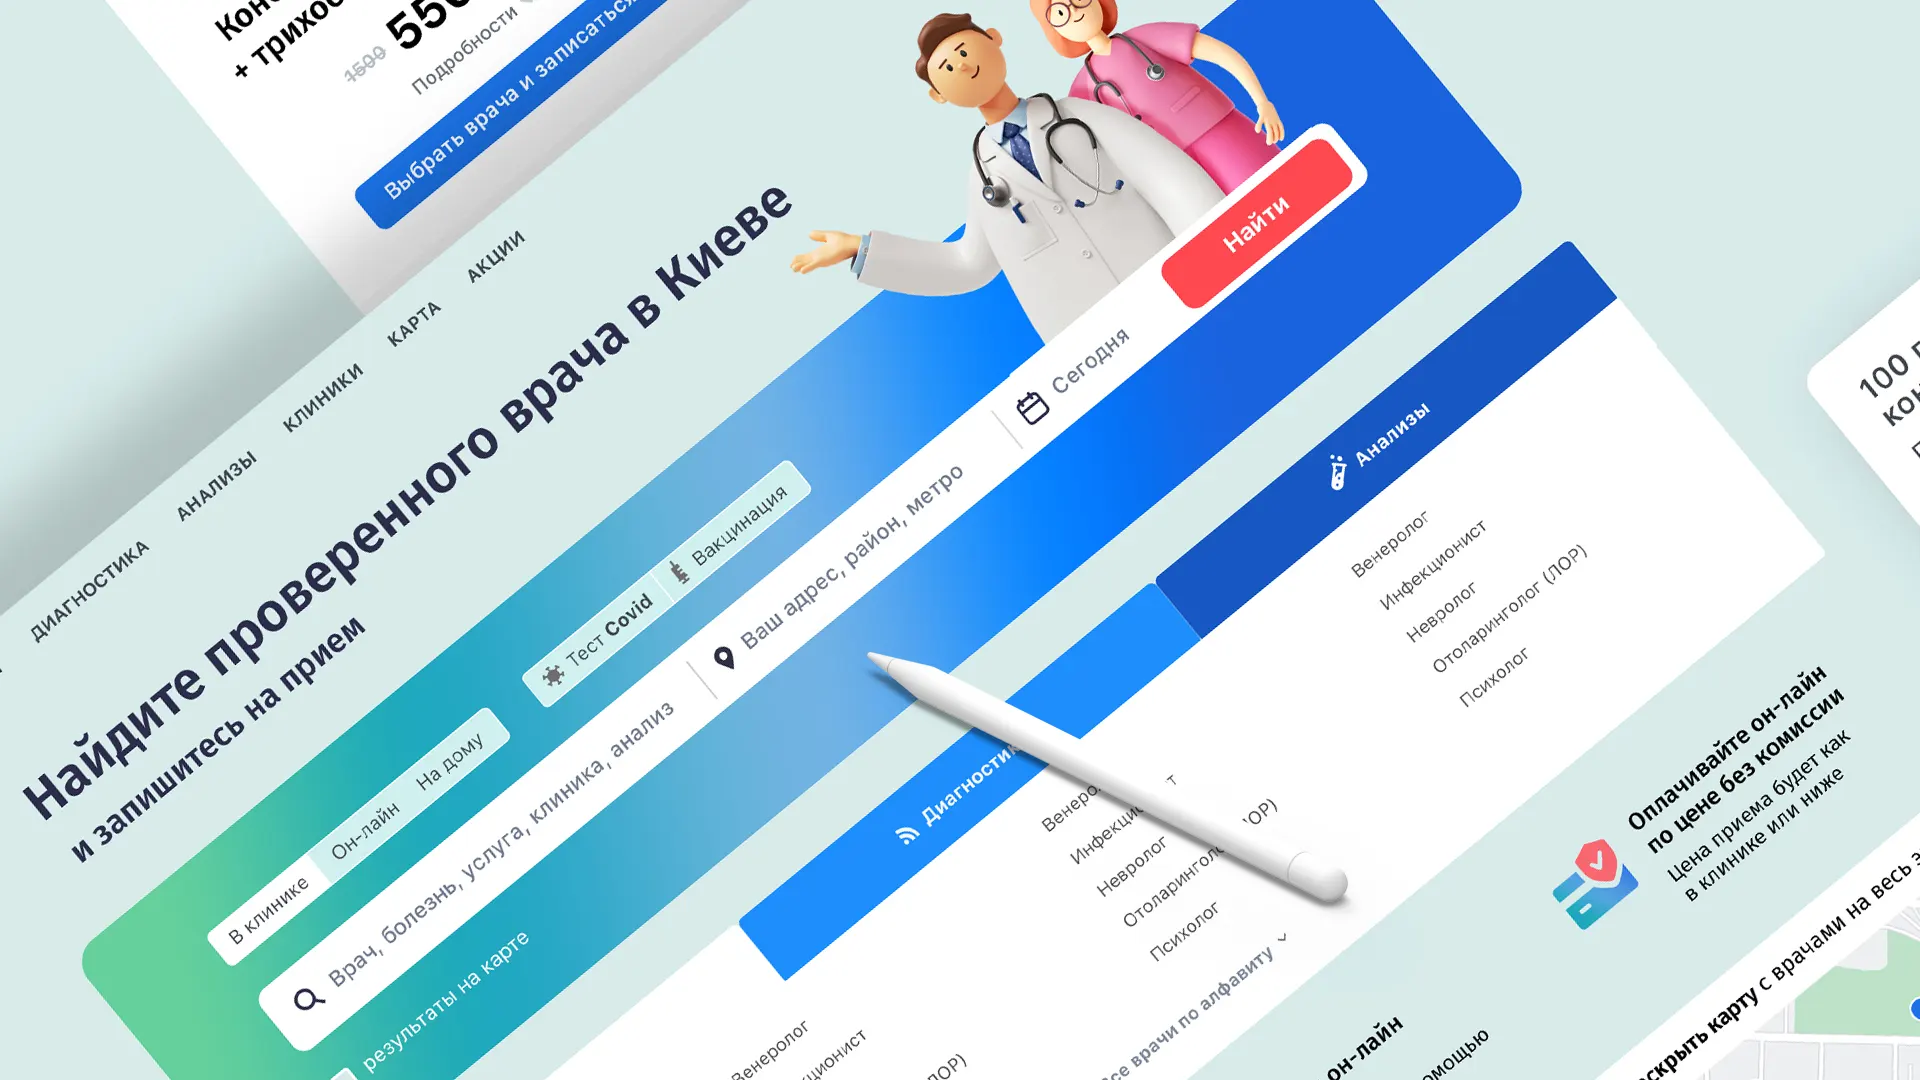 Online doctor search site. MedMap